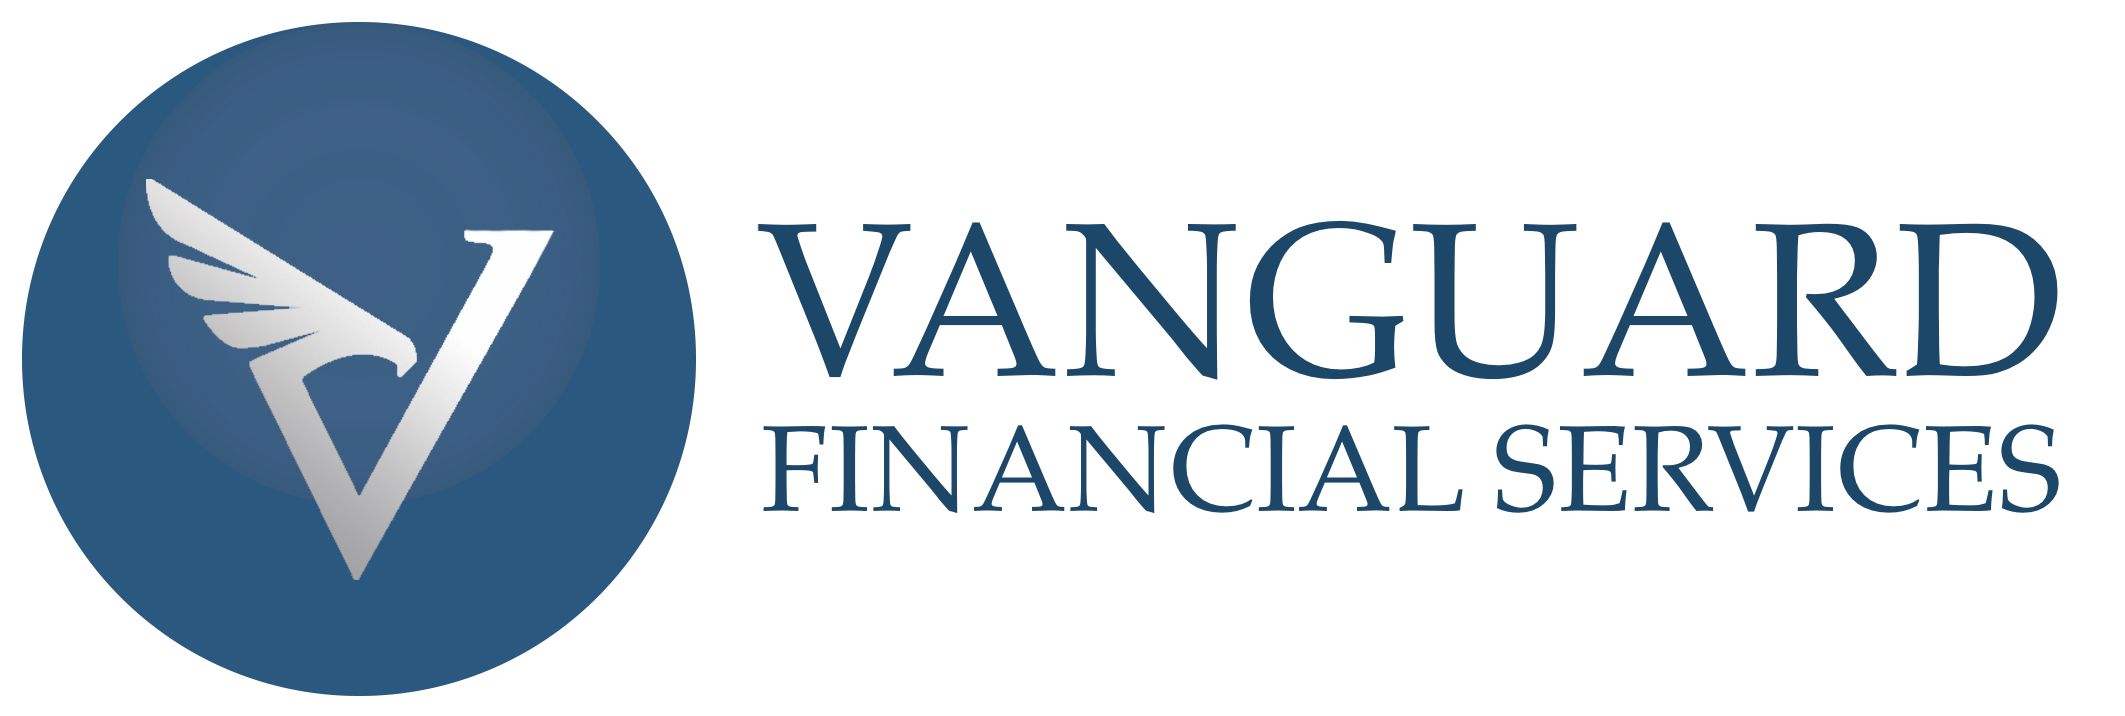 Vanguard Financial Services (VFS Tax)